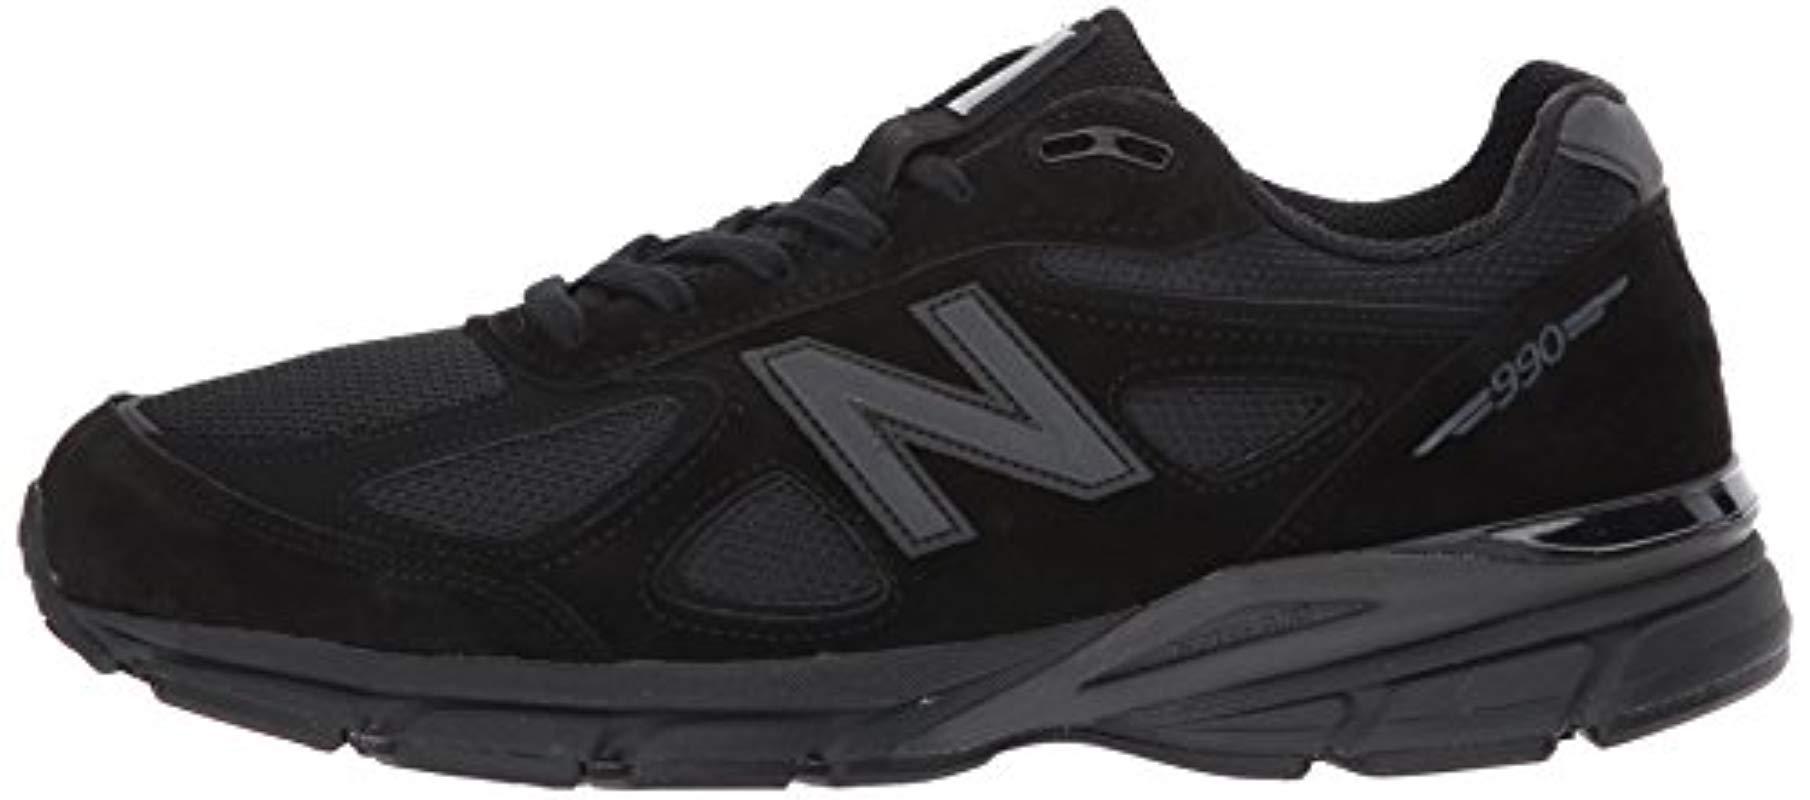 New Balance Leather 990v4 Running Shoes in Black/Grey (Black) for Men - Lyst